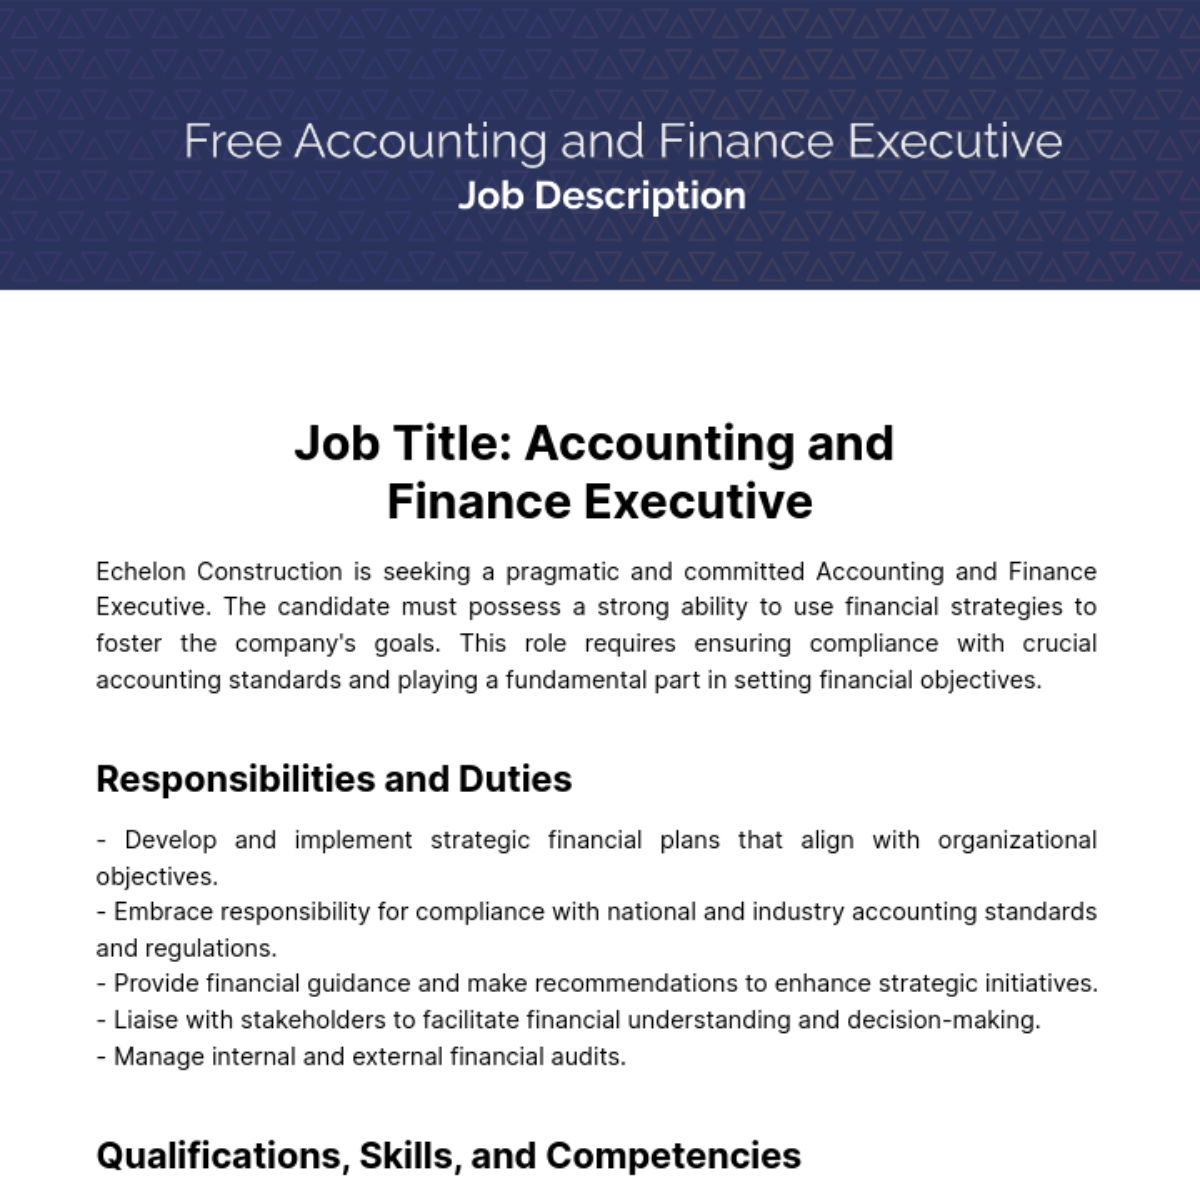 Accounting and Finance Executive Job Description Template